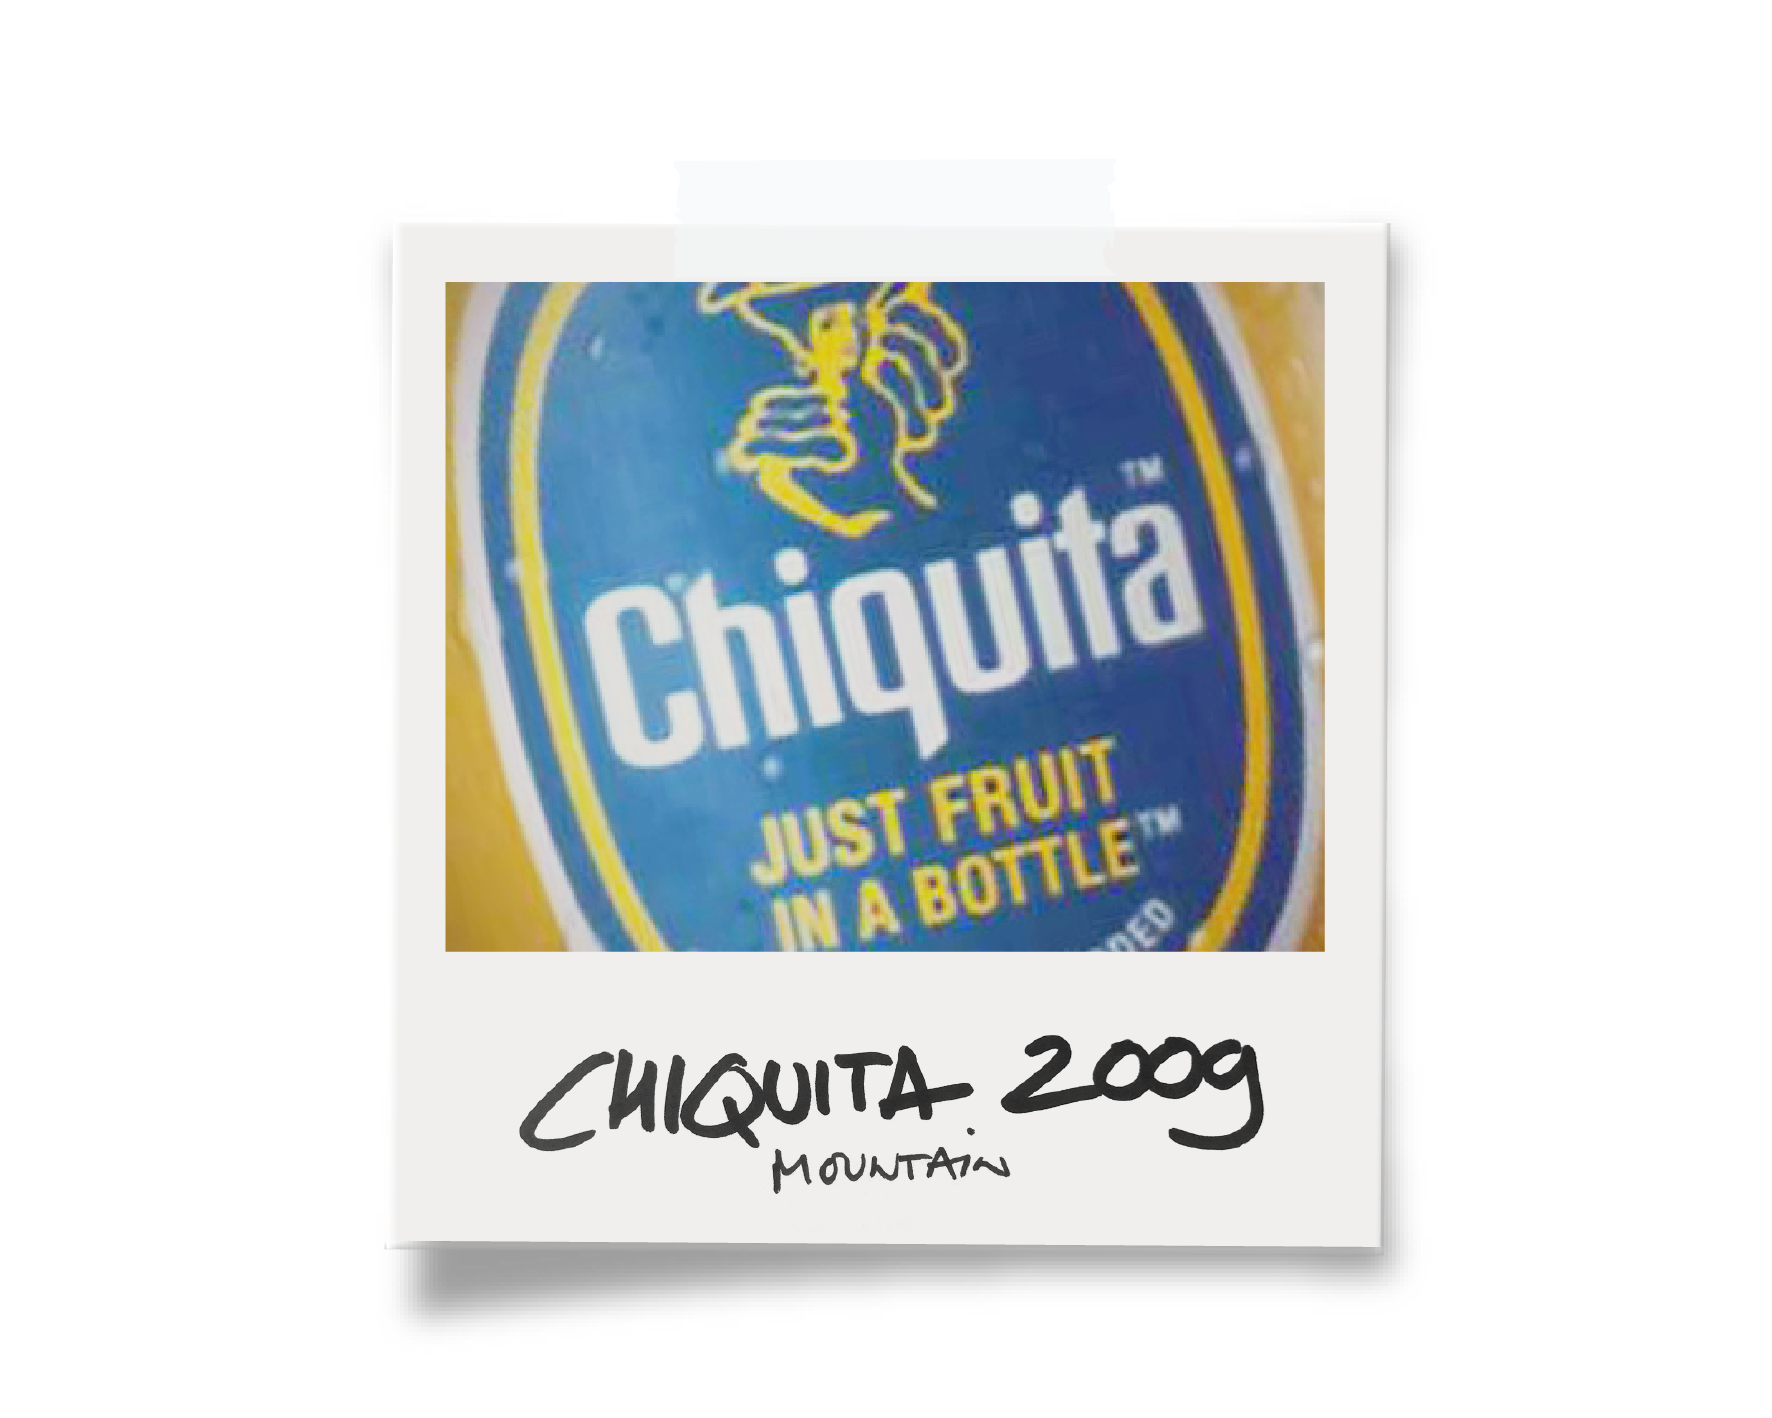 Chiquita op website_Tekengebied 1.png